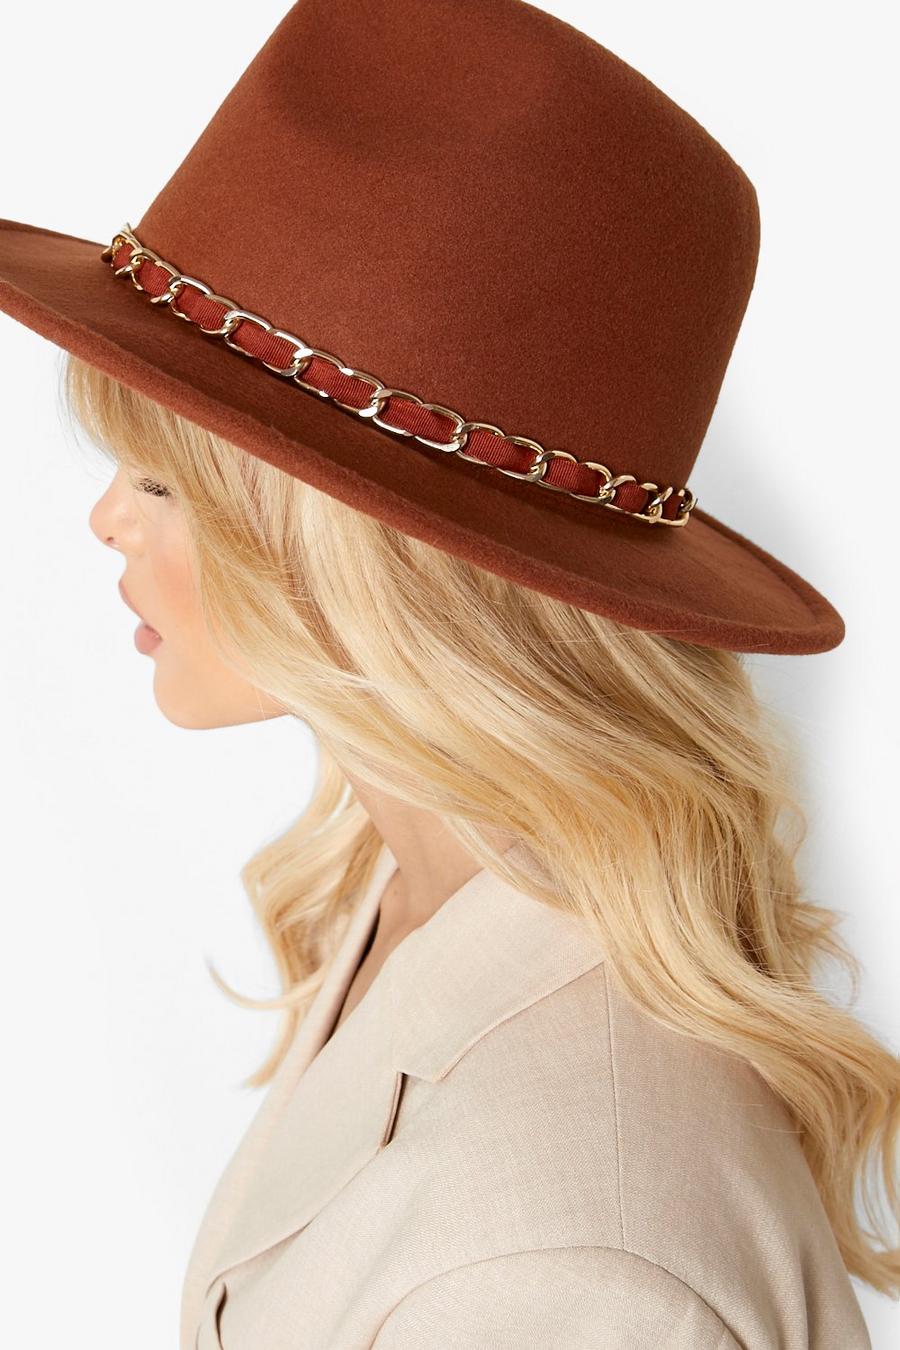 Brown marrone כובע פדורה בצבע חום עם שרשרת